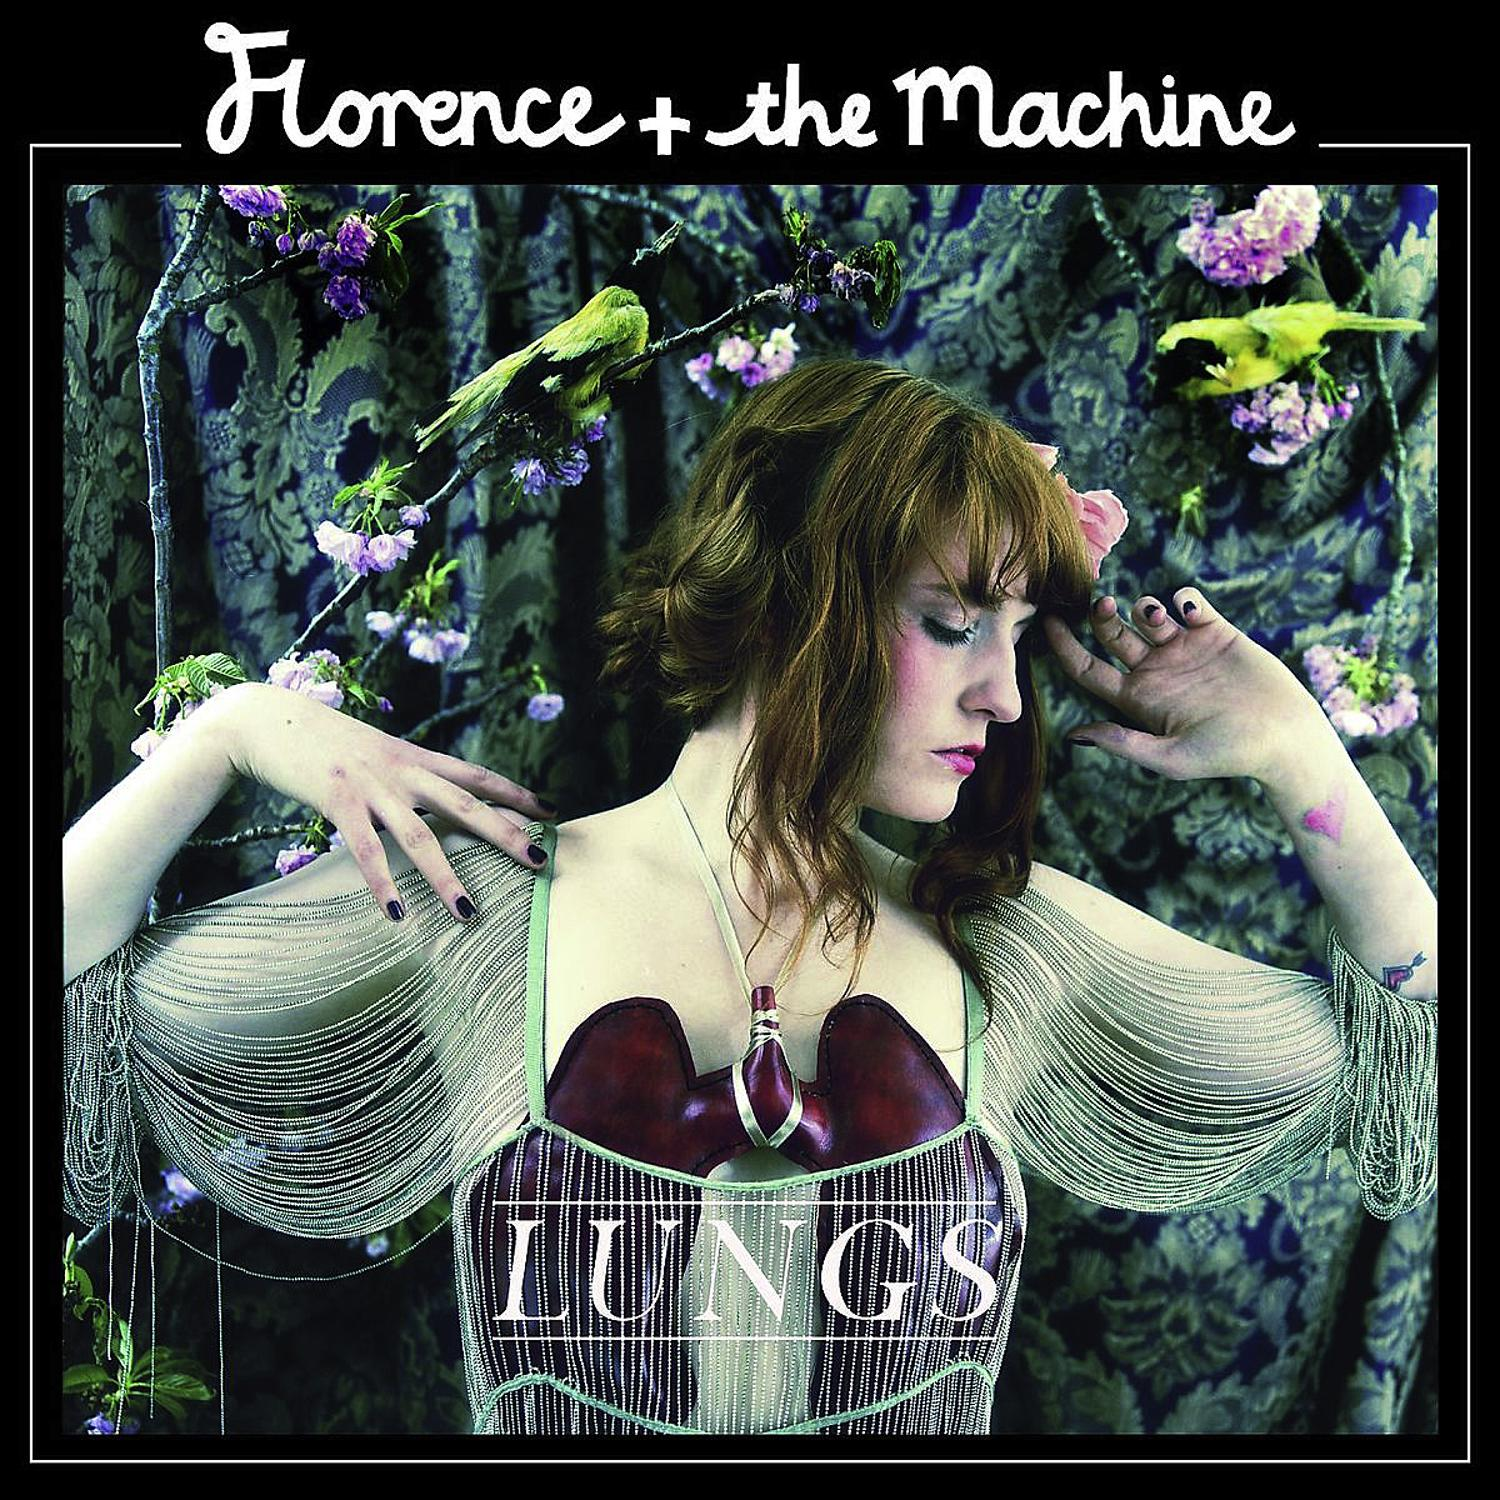 LUNGS (CD + EXTRA/Enhanced) - (ENHANCED) - Machine Florence The